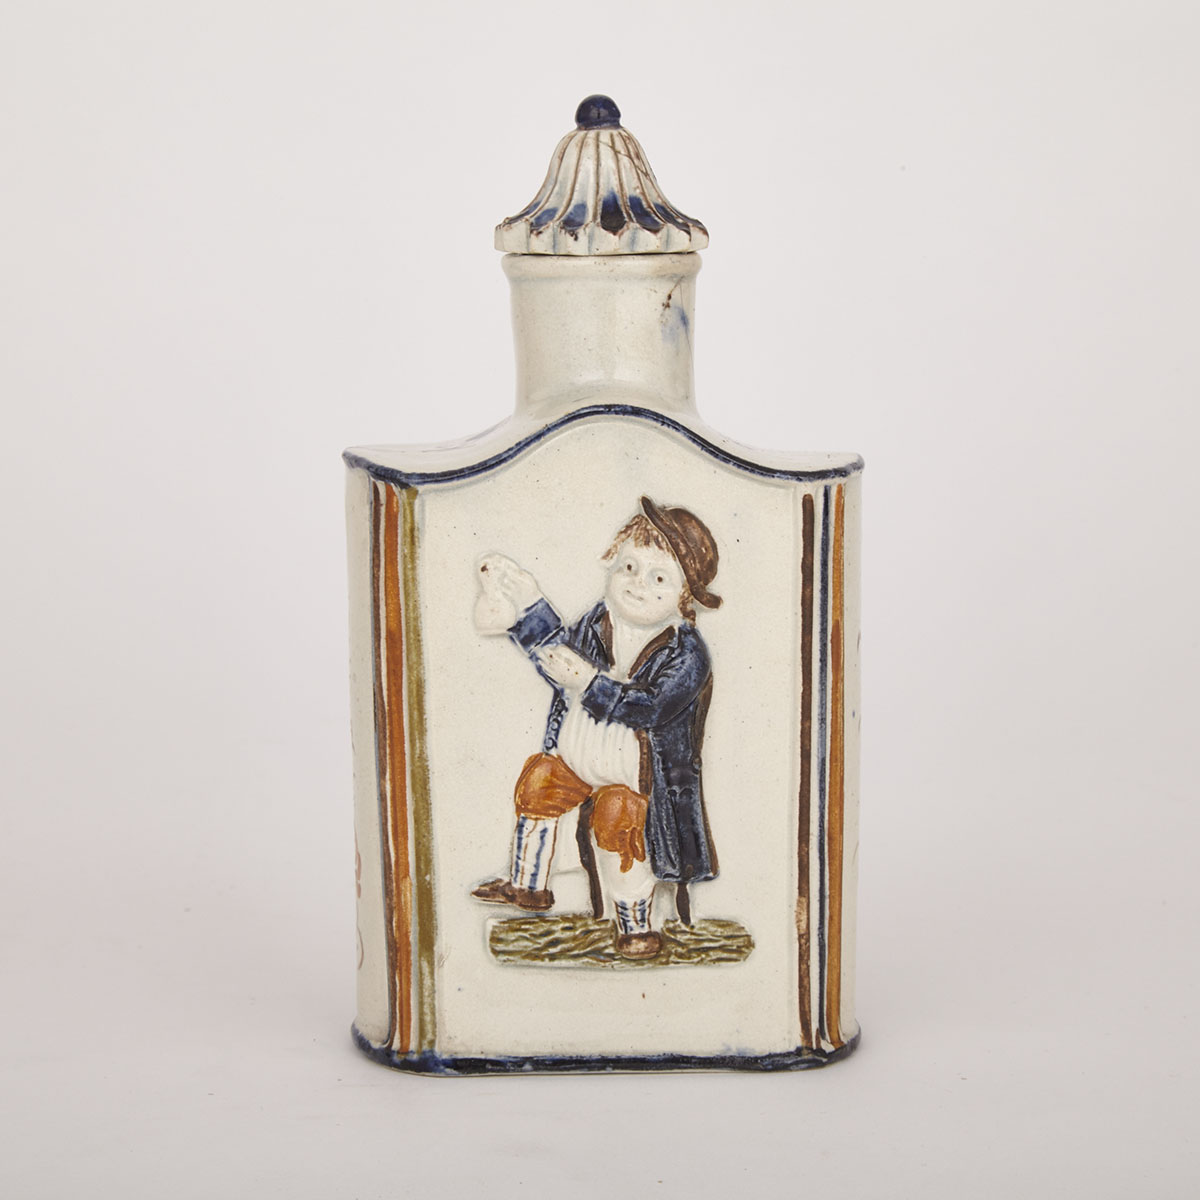 Pratt Ware Tea Caddy and Cover, c.1800-10